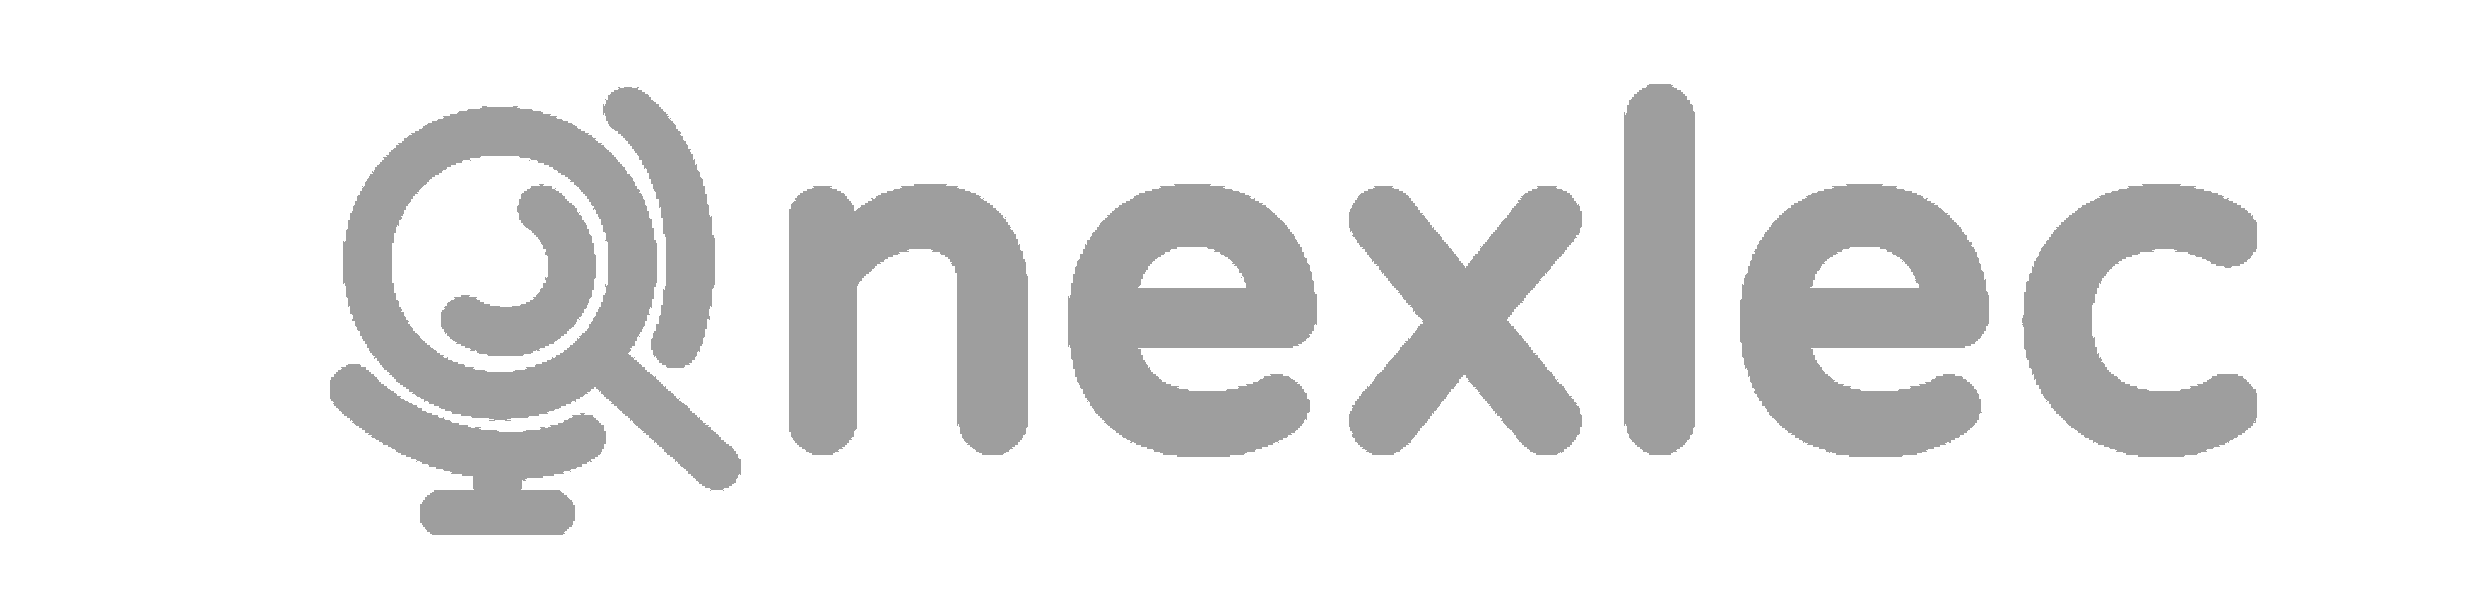 nexlec-logo-grey